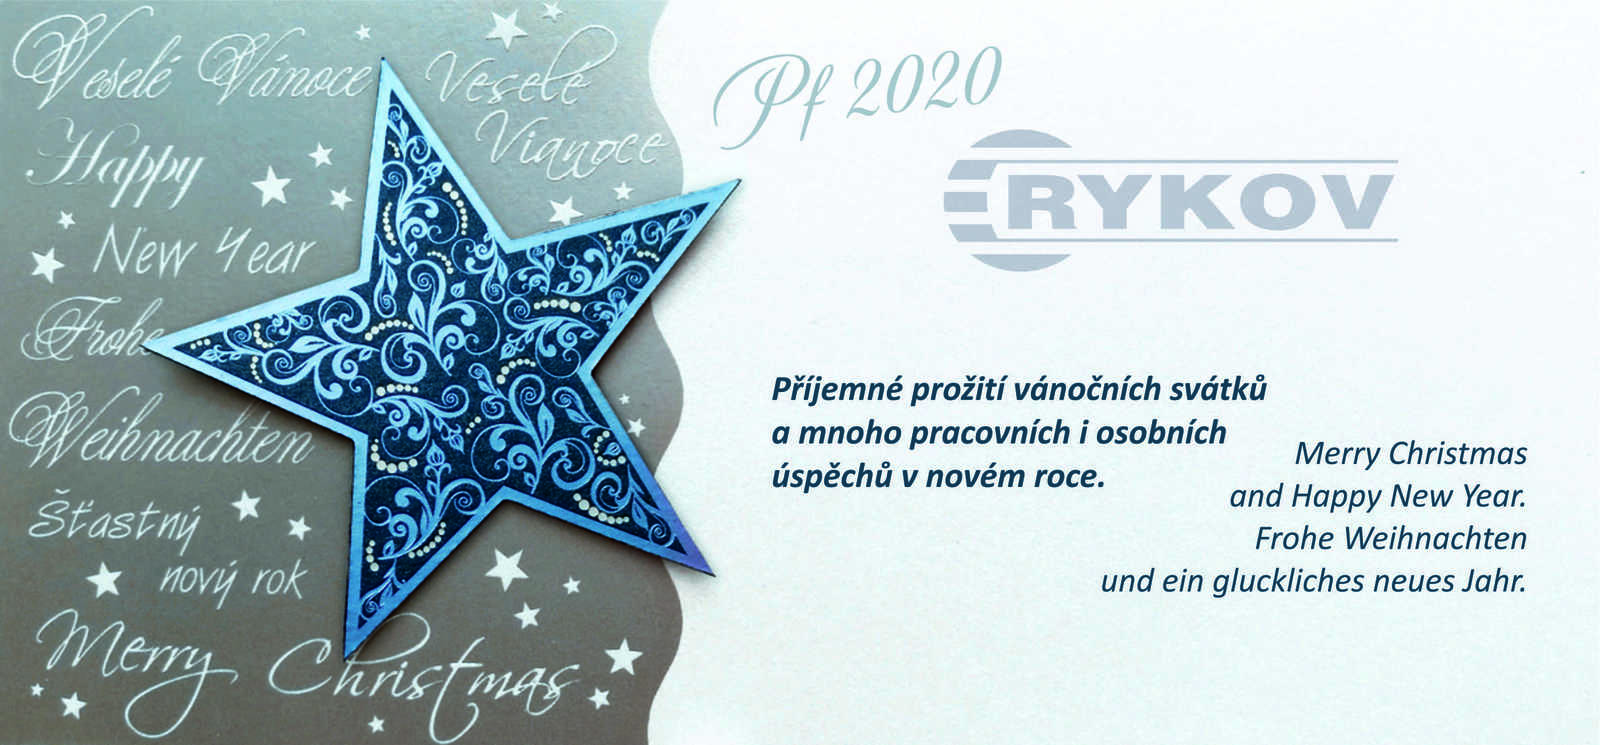 Rykov - PF 2020.jpg